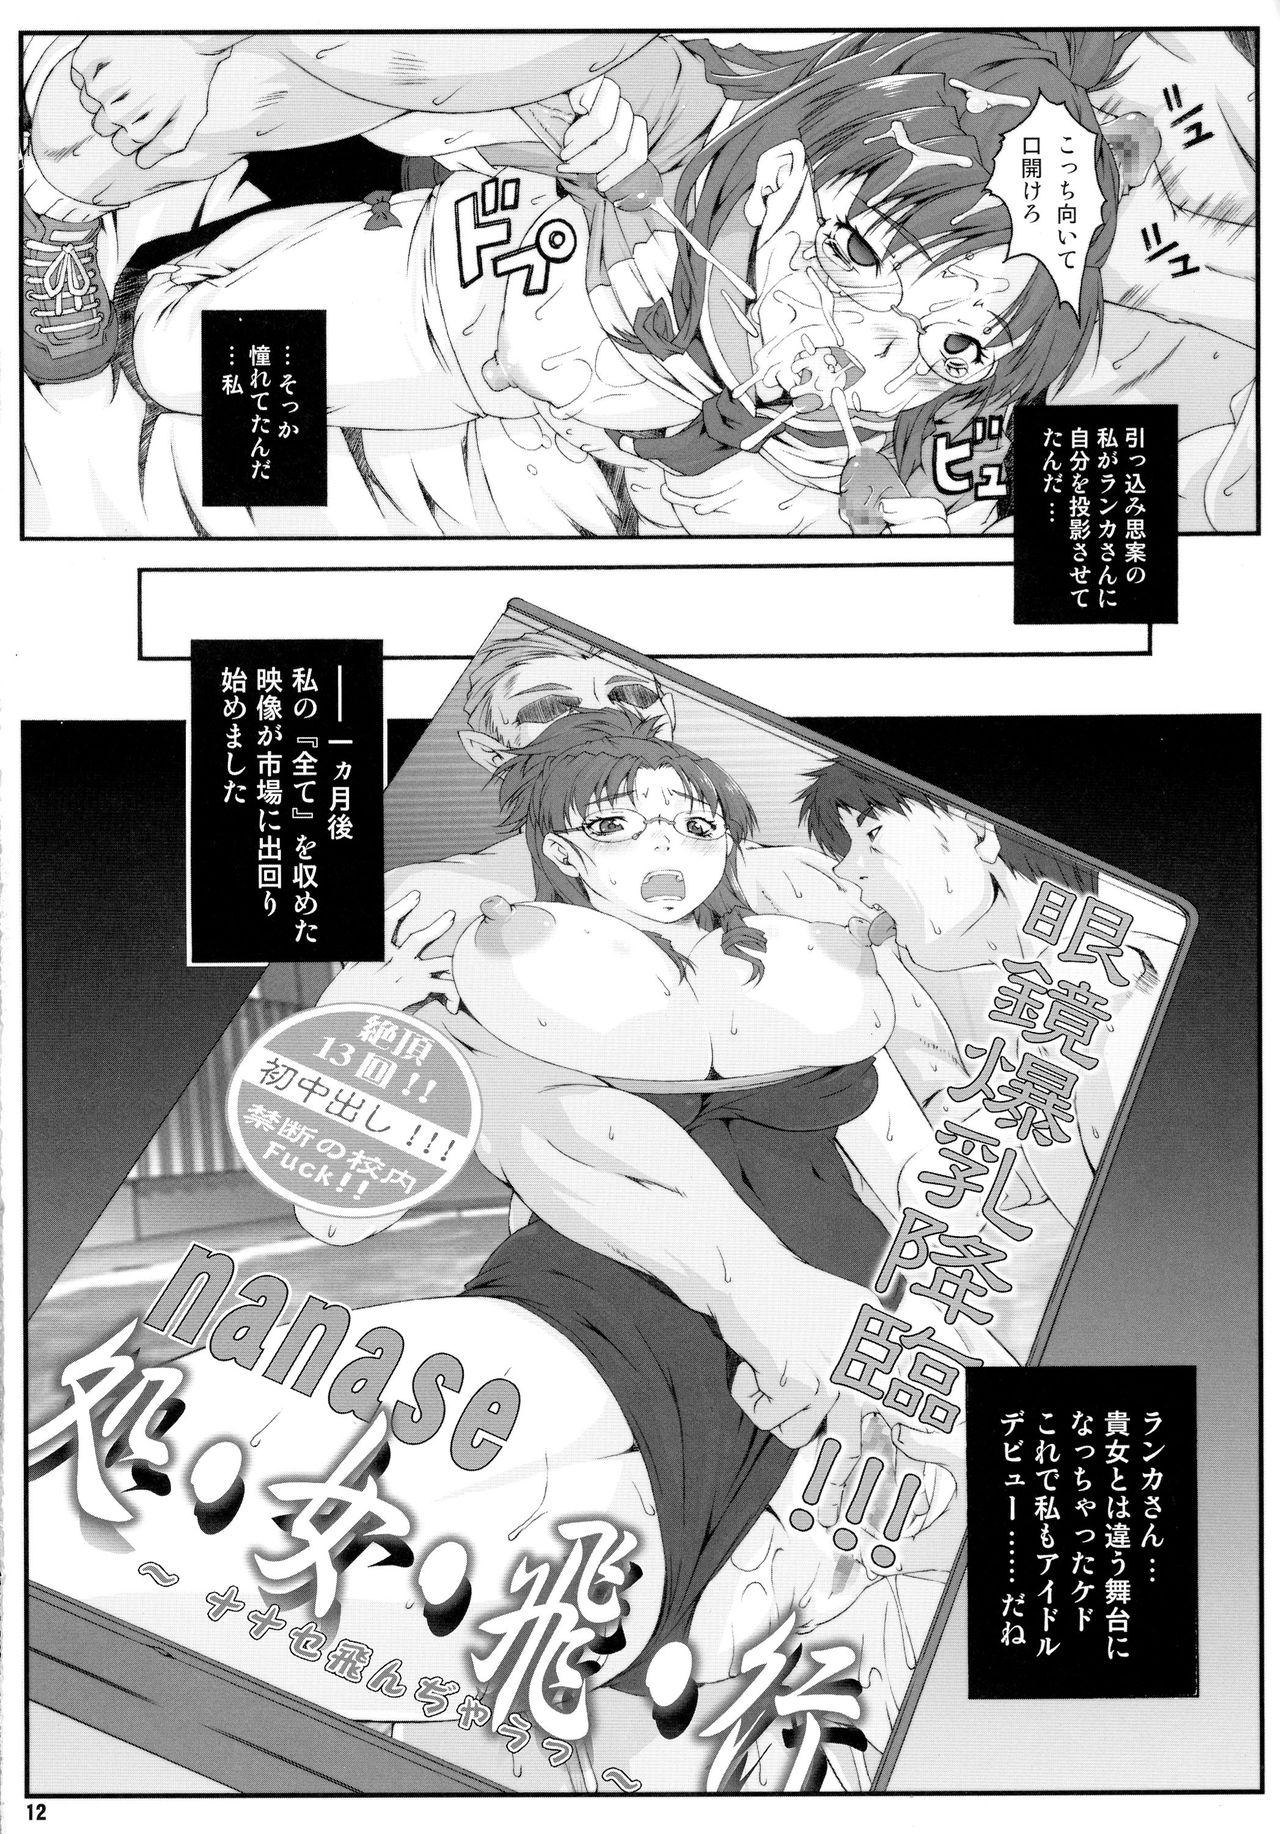 Masterbate Misoka no 5 - Samurai spirits Macross frontier Model - Page 12